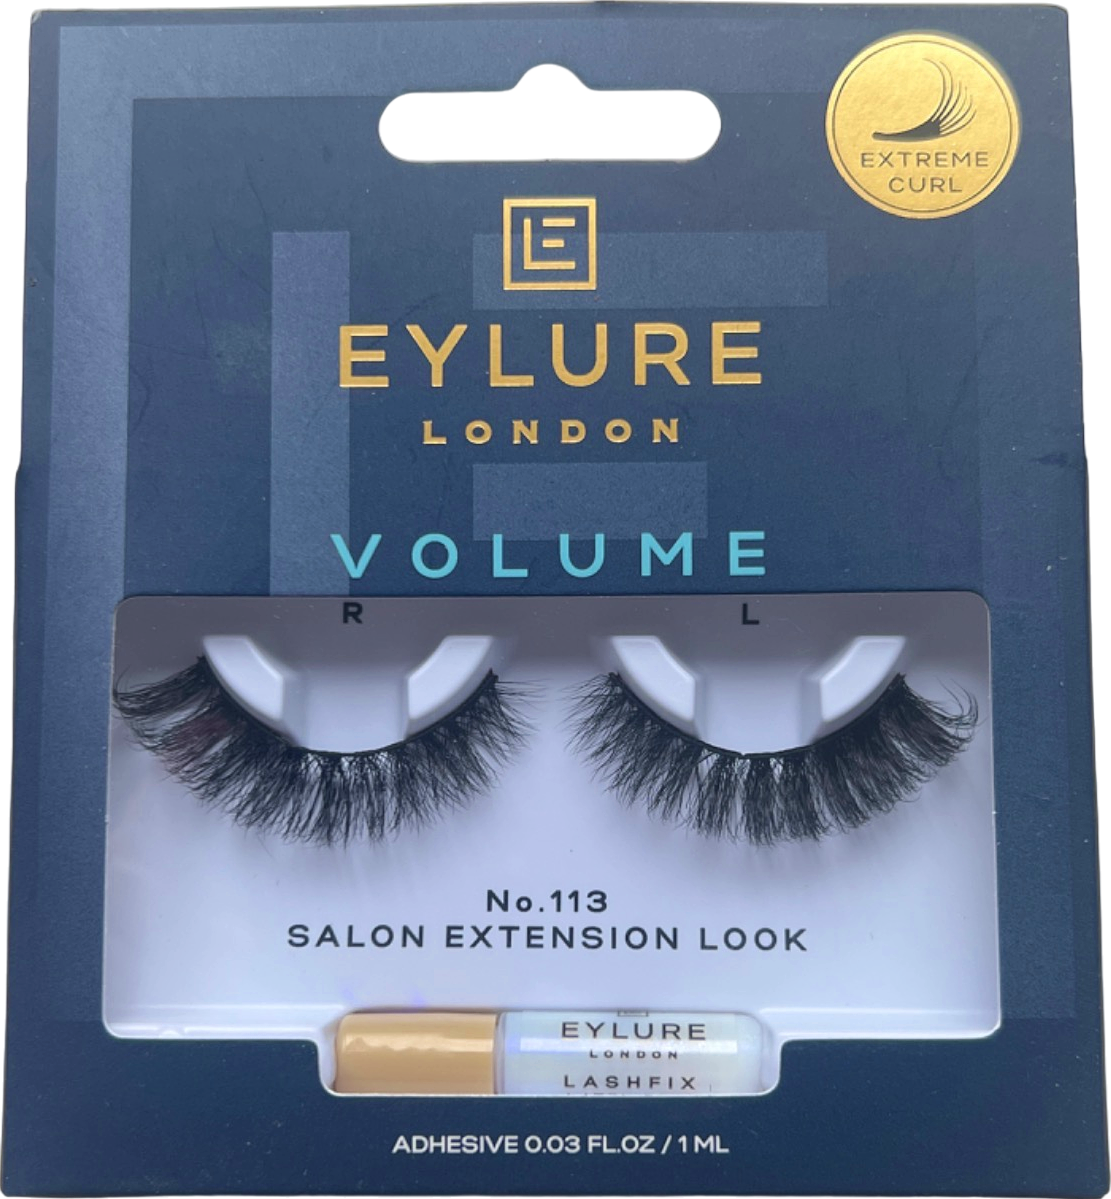 Eylure London Volume No.113 Salon Extension Look 1ml